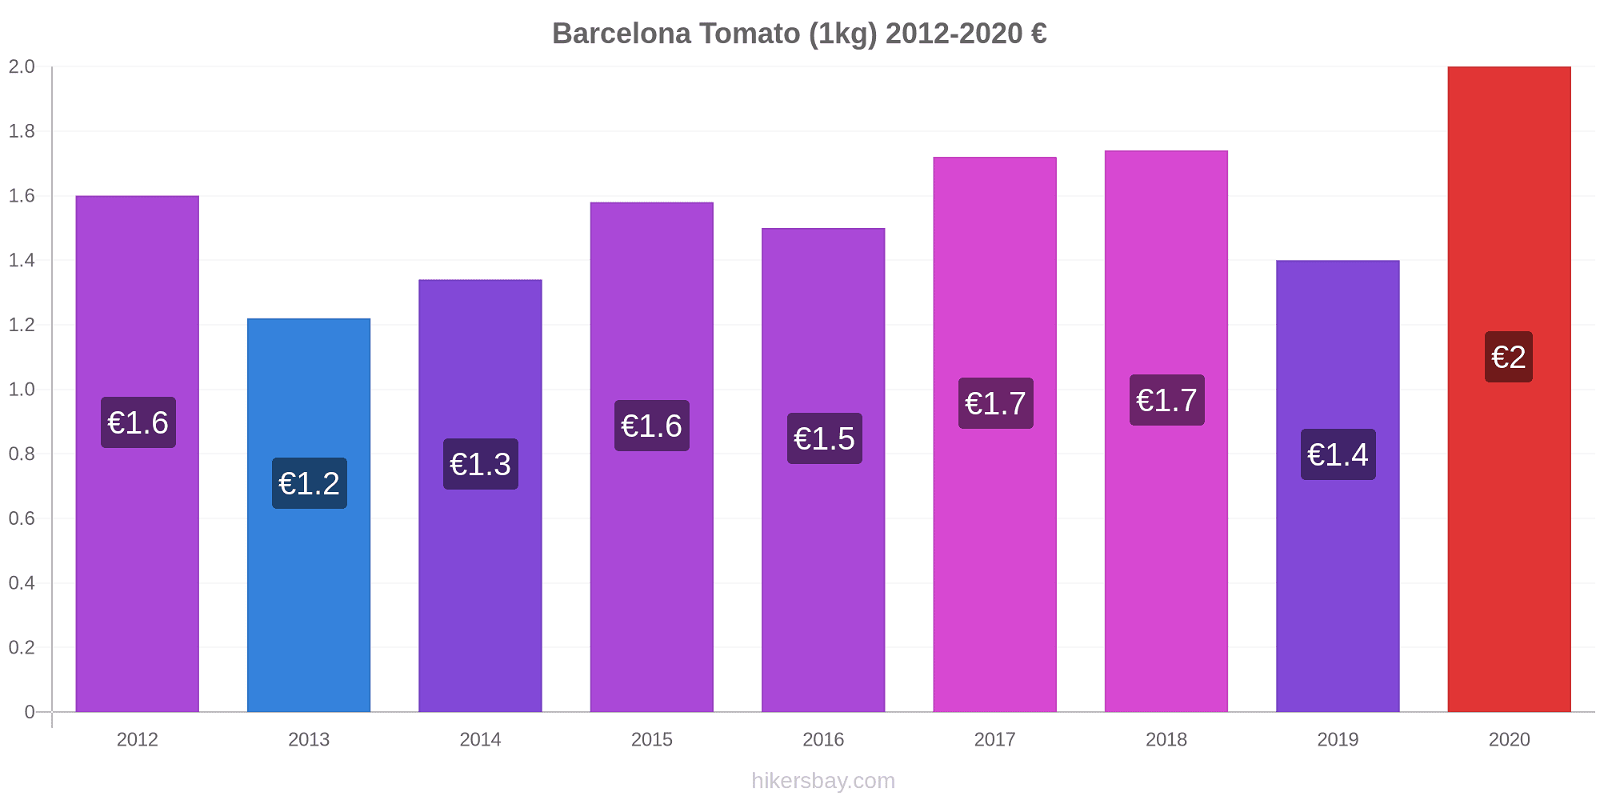 Barcelona price changes Tomato (1kg) hikersbay.com